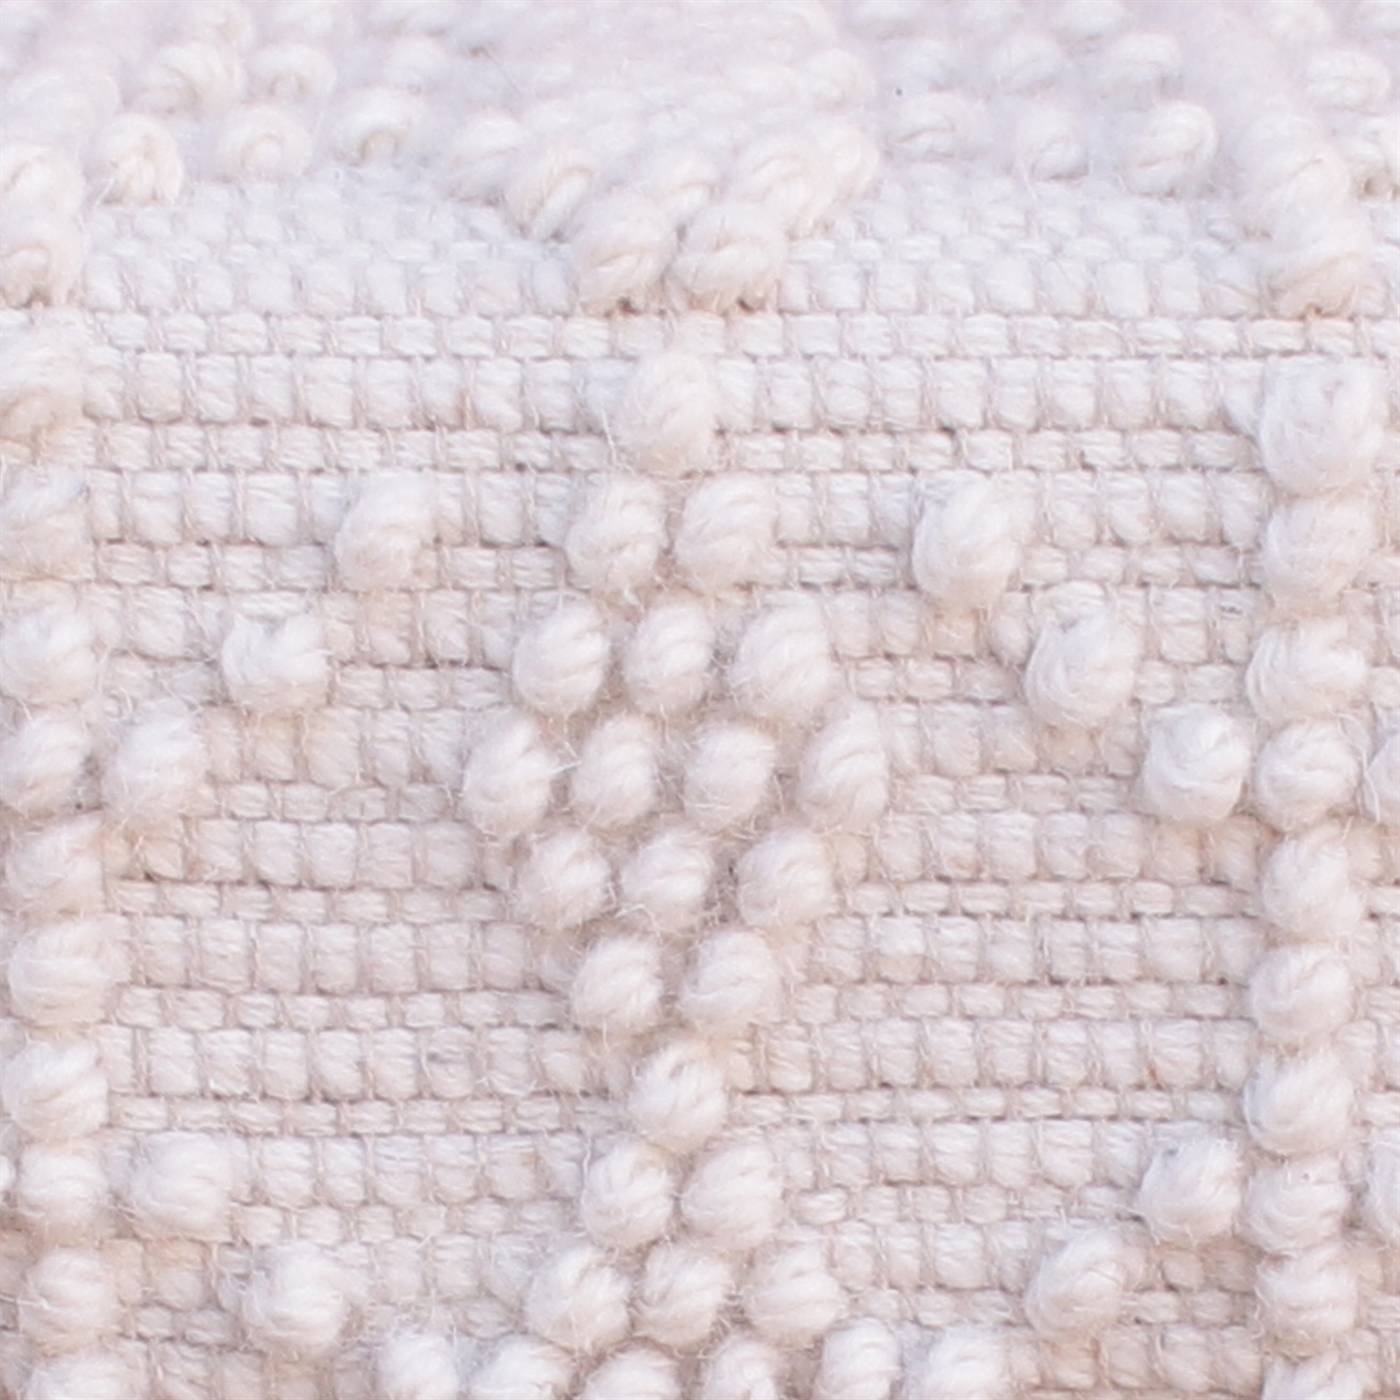 Leeward Bench, 120x40x50 cm, Natural, Natural White, Jute, Wool, Hand Woven, Pitloom, All Loop